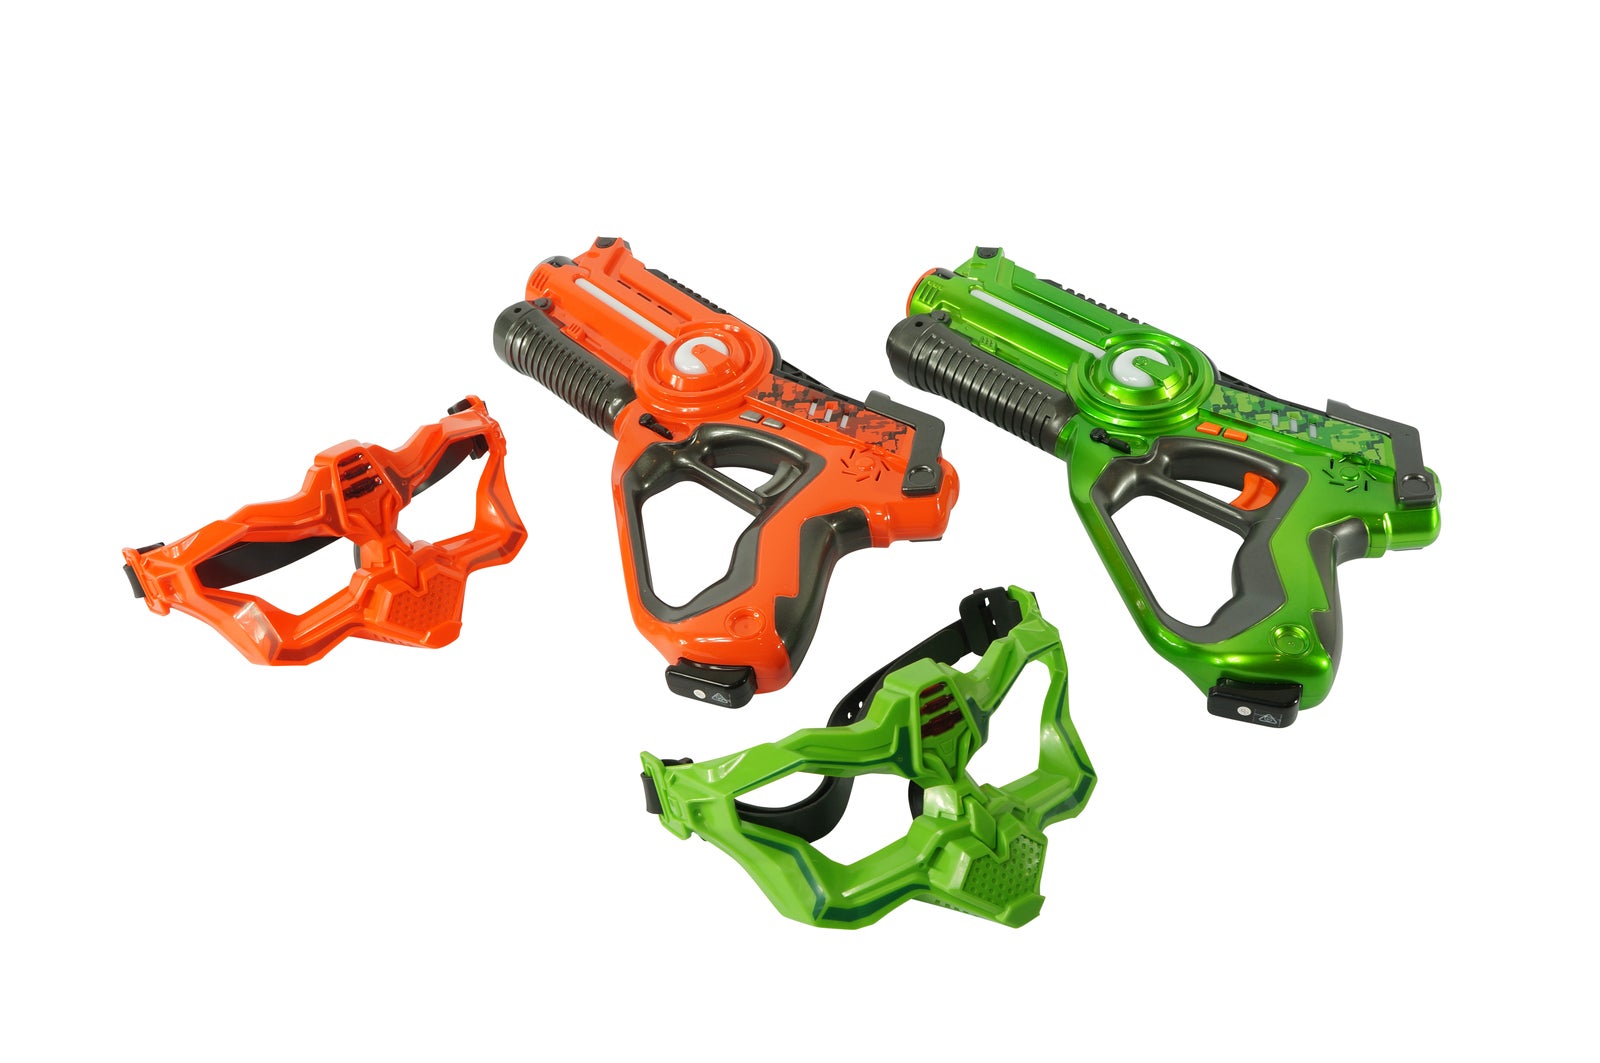 Call of Life 2 Player Laser Tag Gun with Masks Set